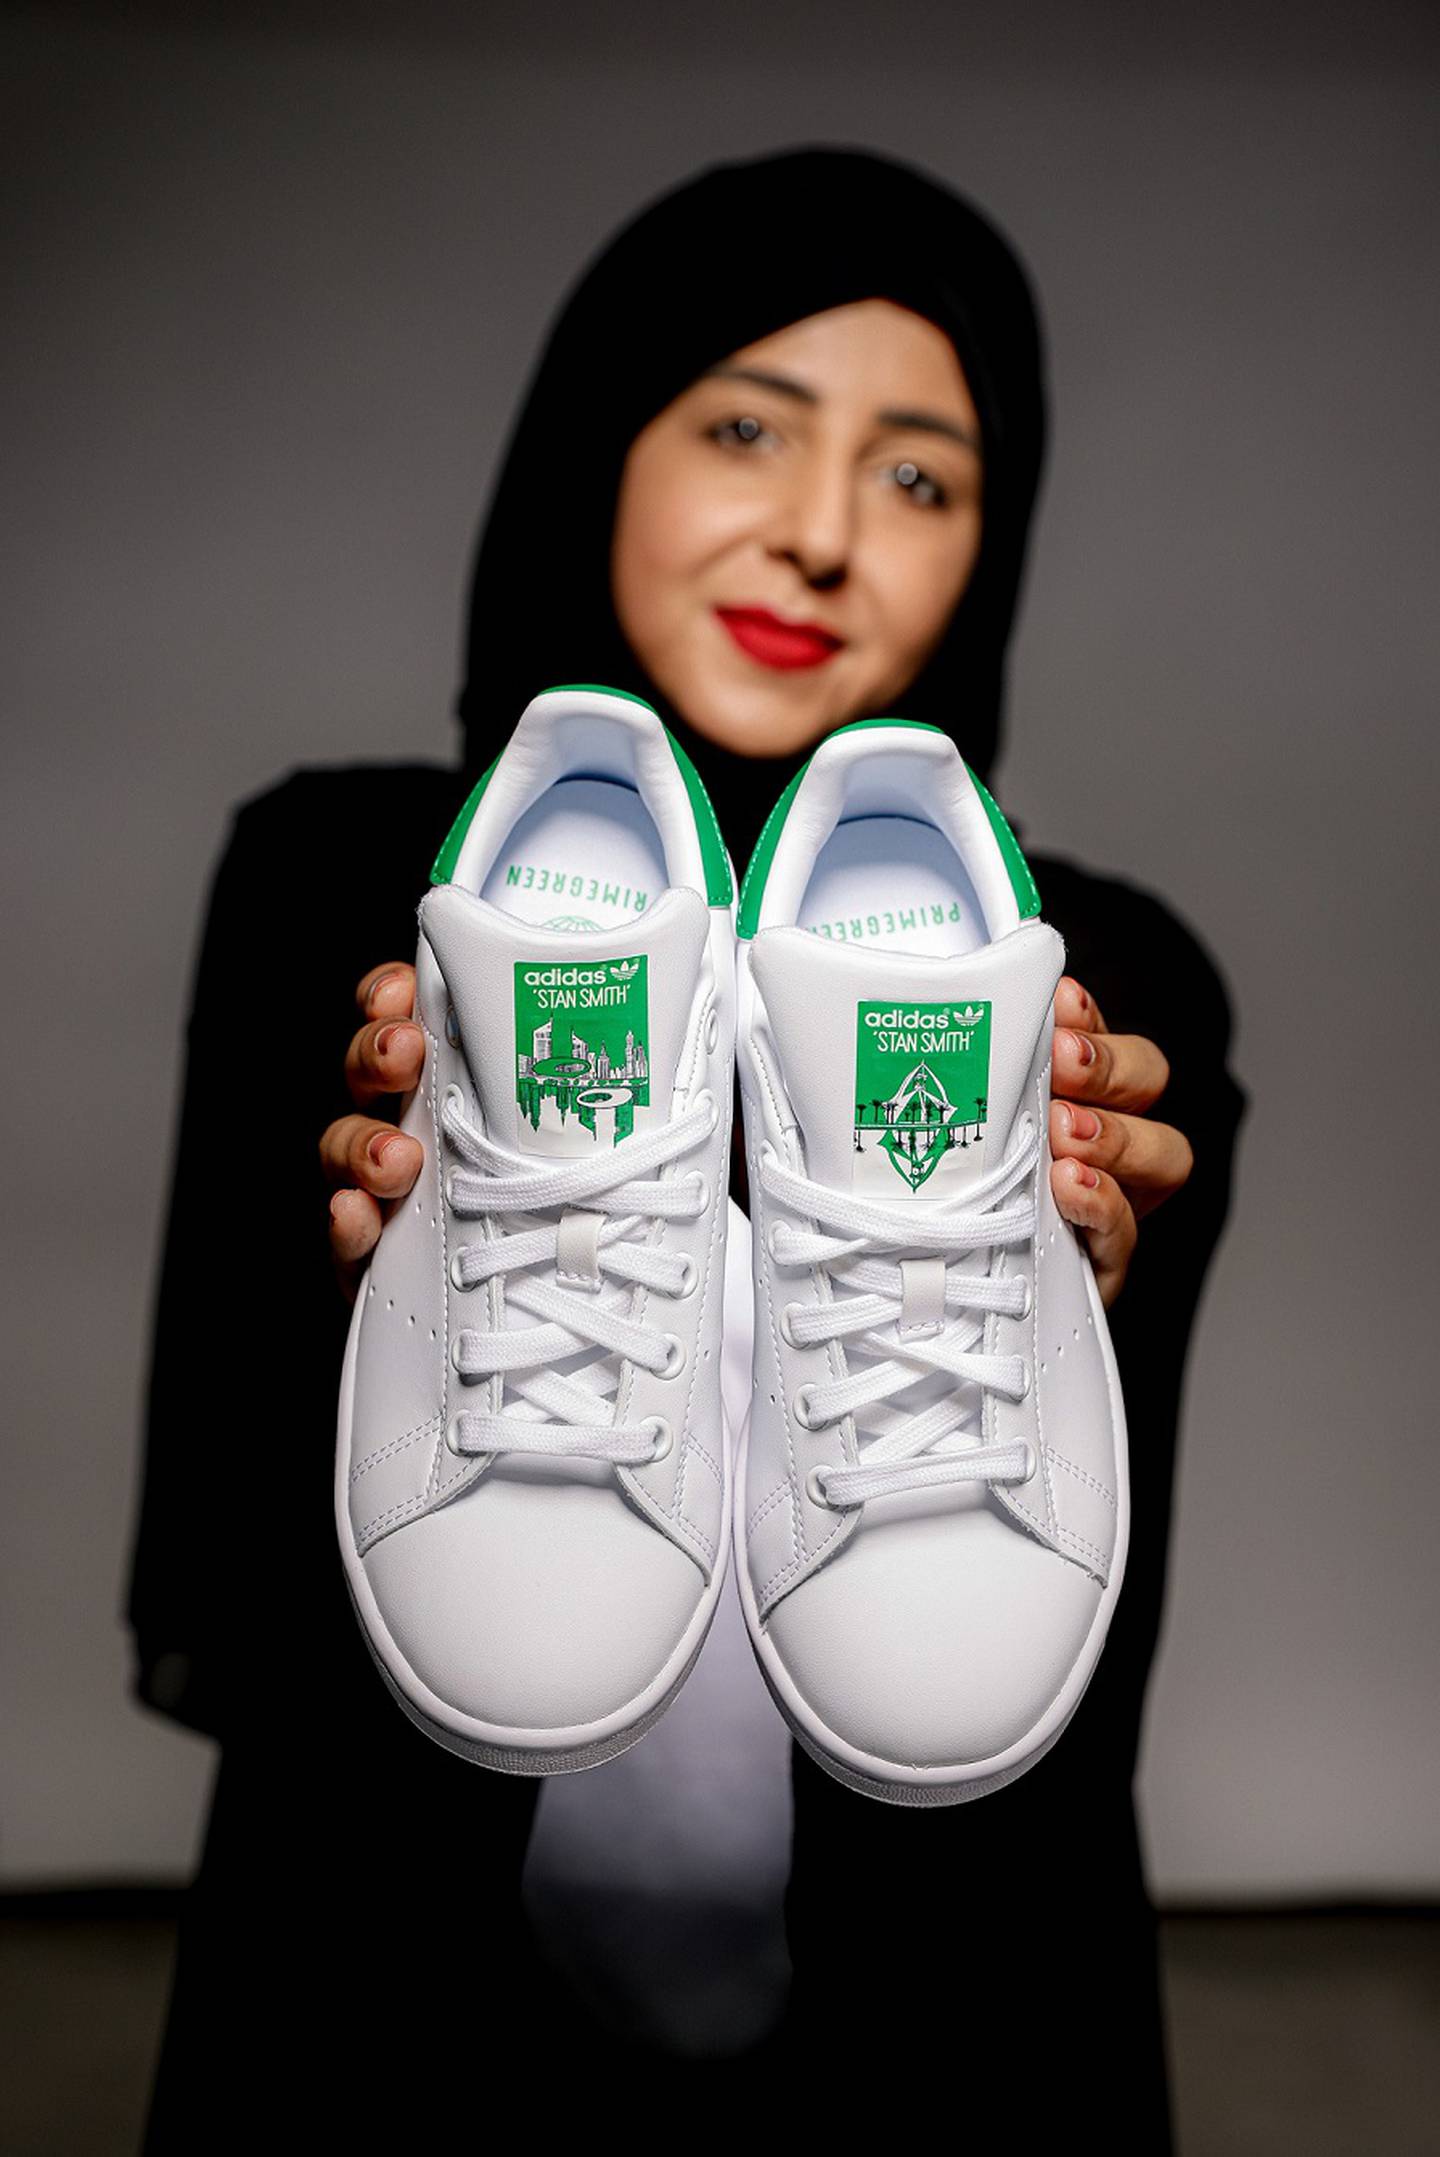 Adidas Stan Smith trainers, redesigned by Emirati artist, Maisoon Al Saleh. Photo: adidas